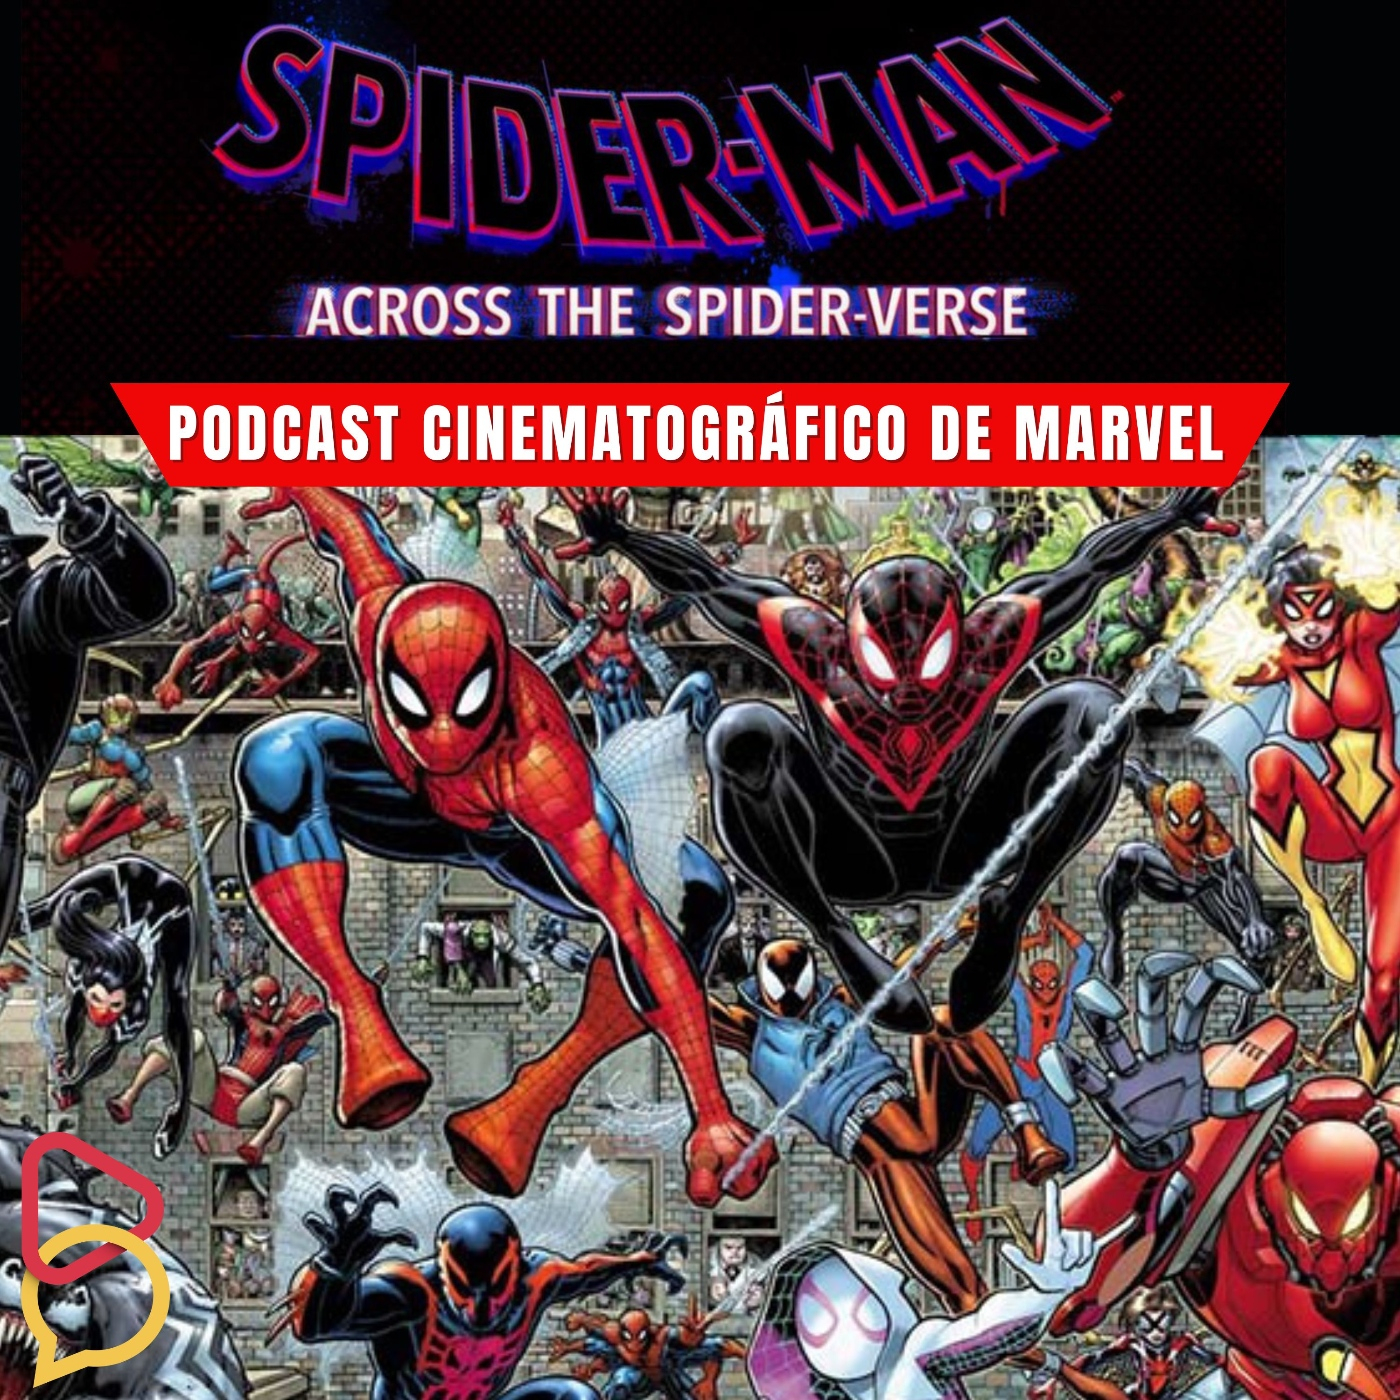 PCM – Podcast Cinematográfico de Marvel